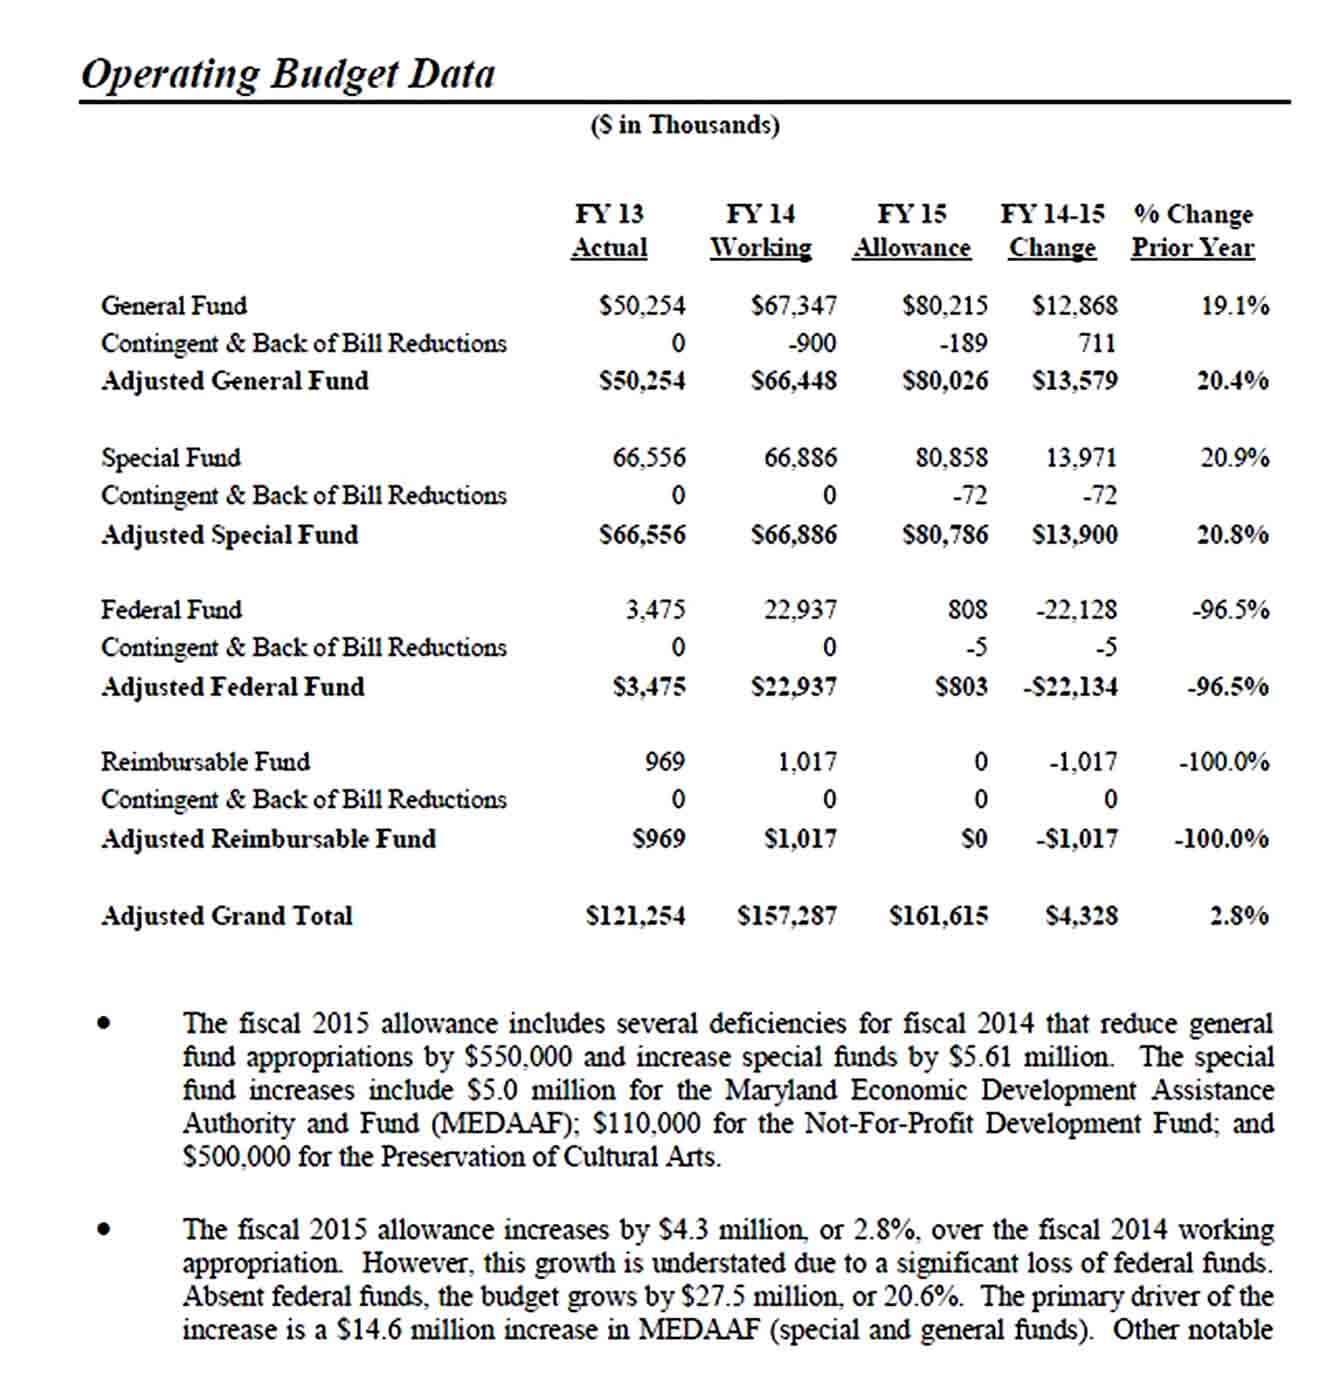 Business Department Budget Template